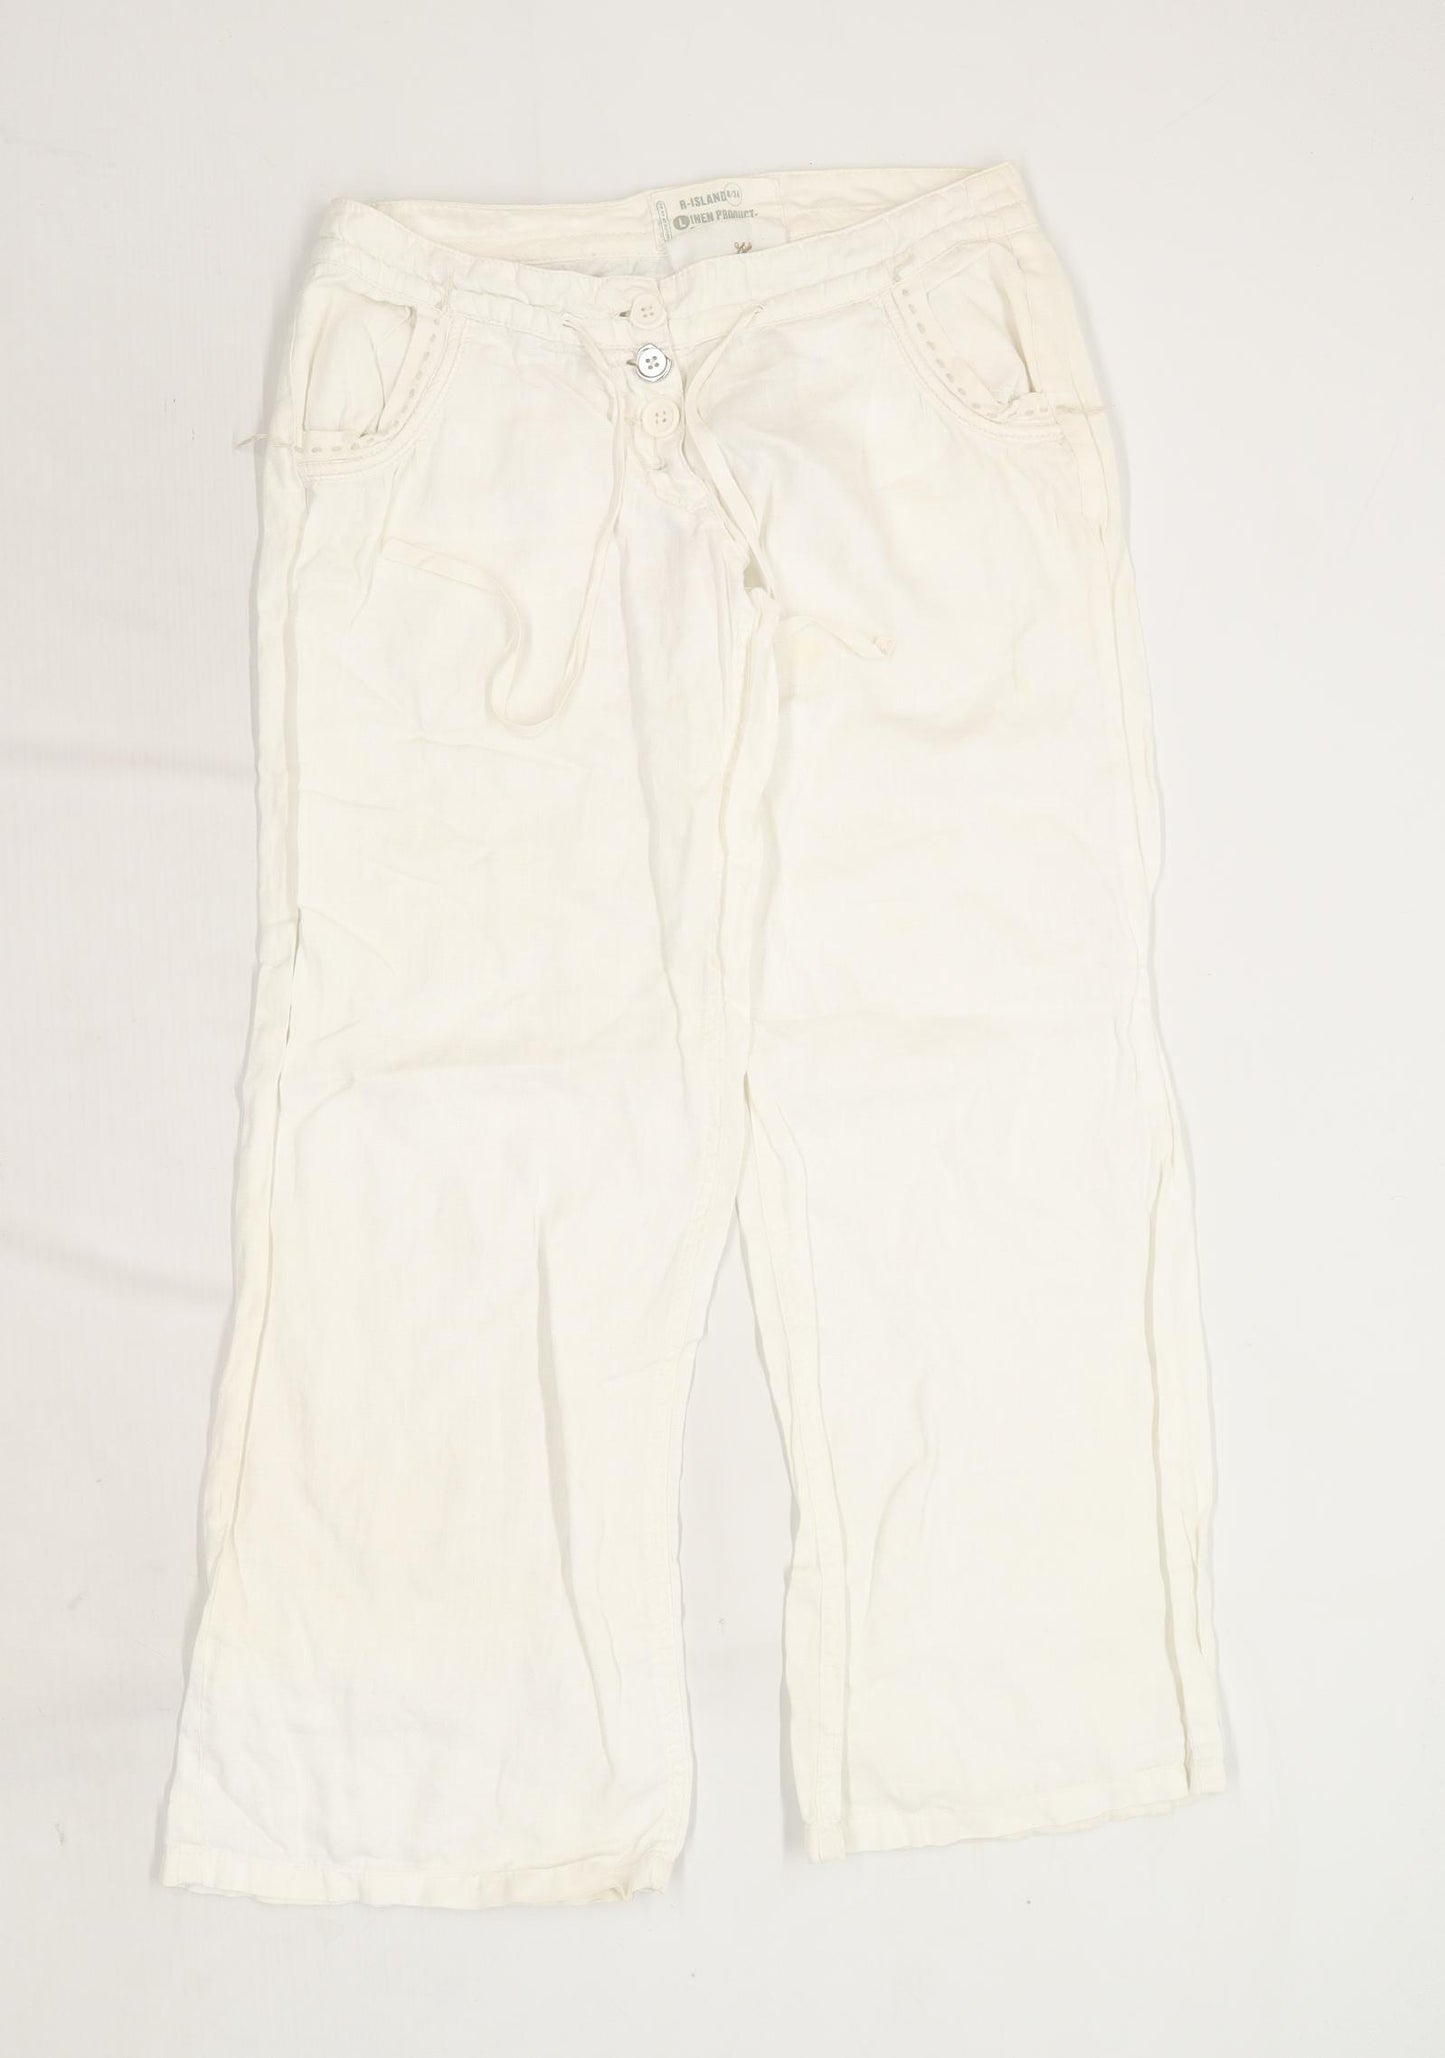 Womens River Island White Linen Trousers Size 8/L27